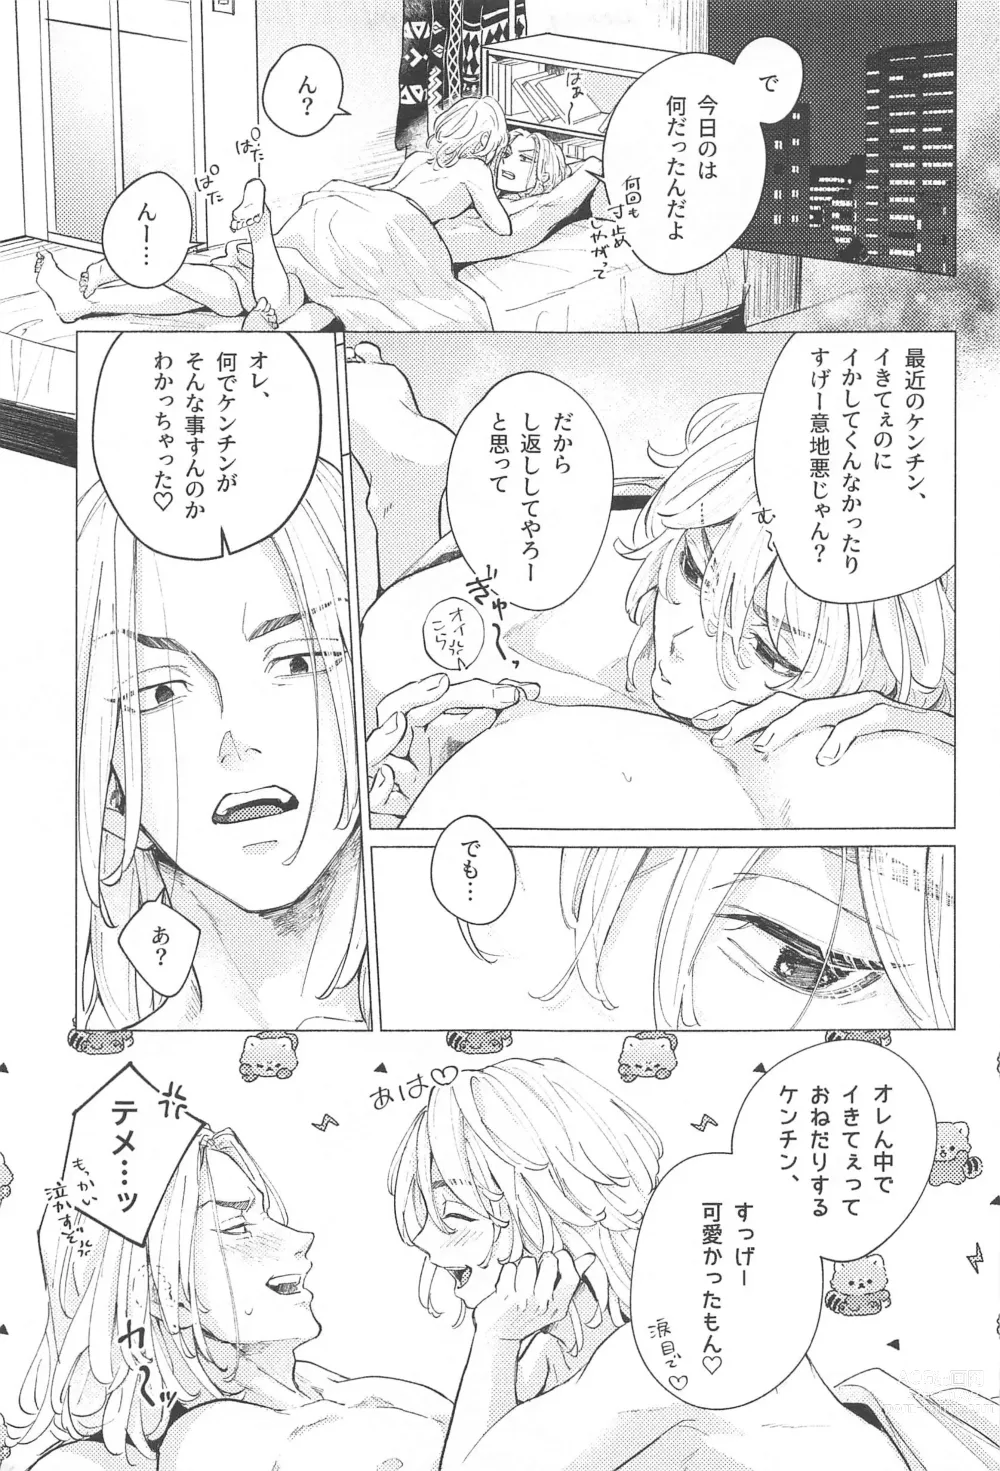 Page 20 of doujinshi Endure.